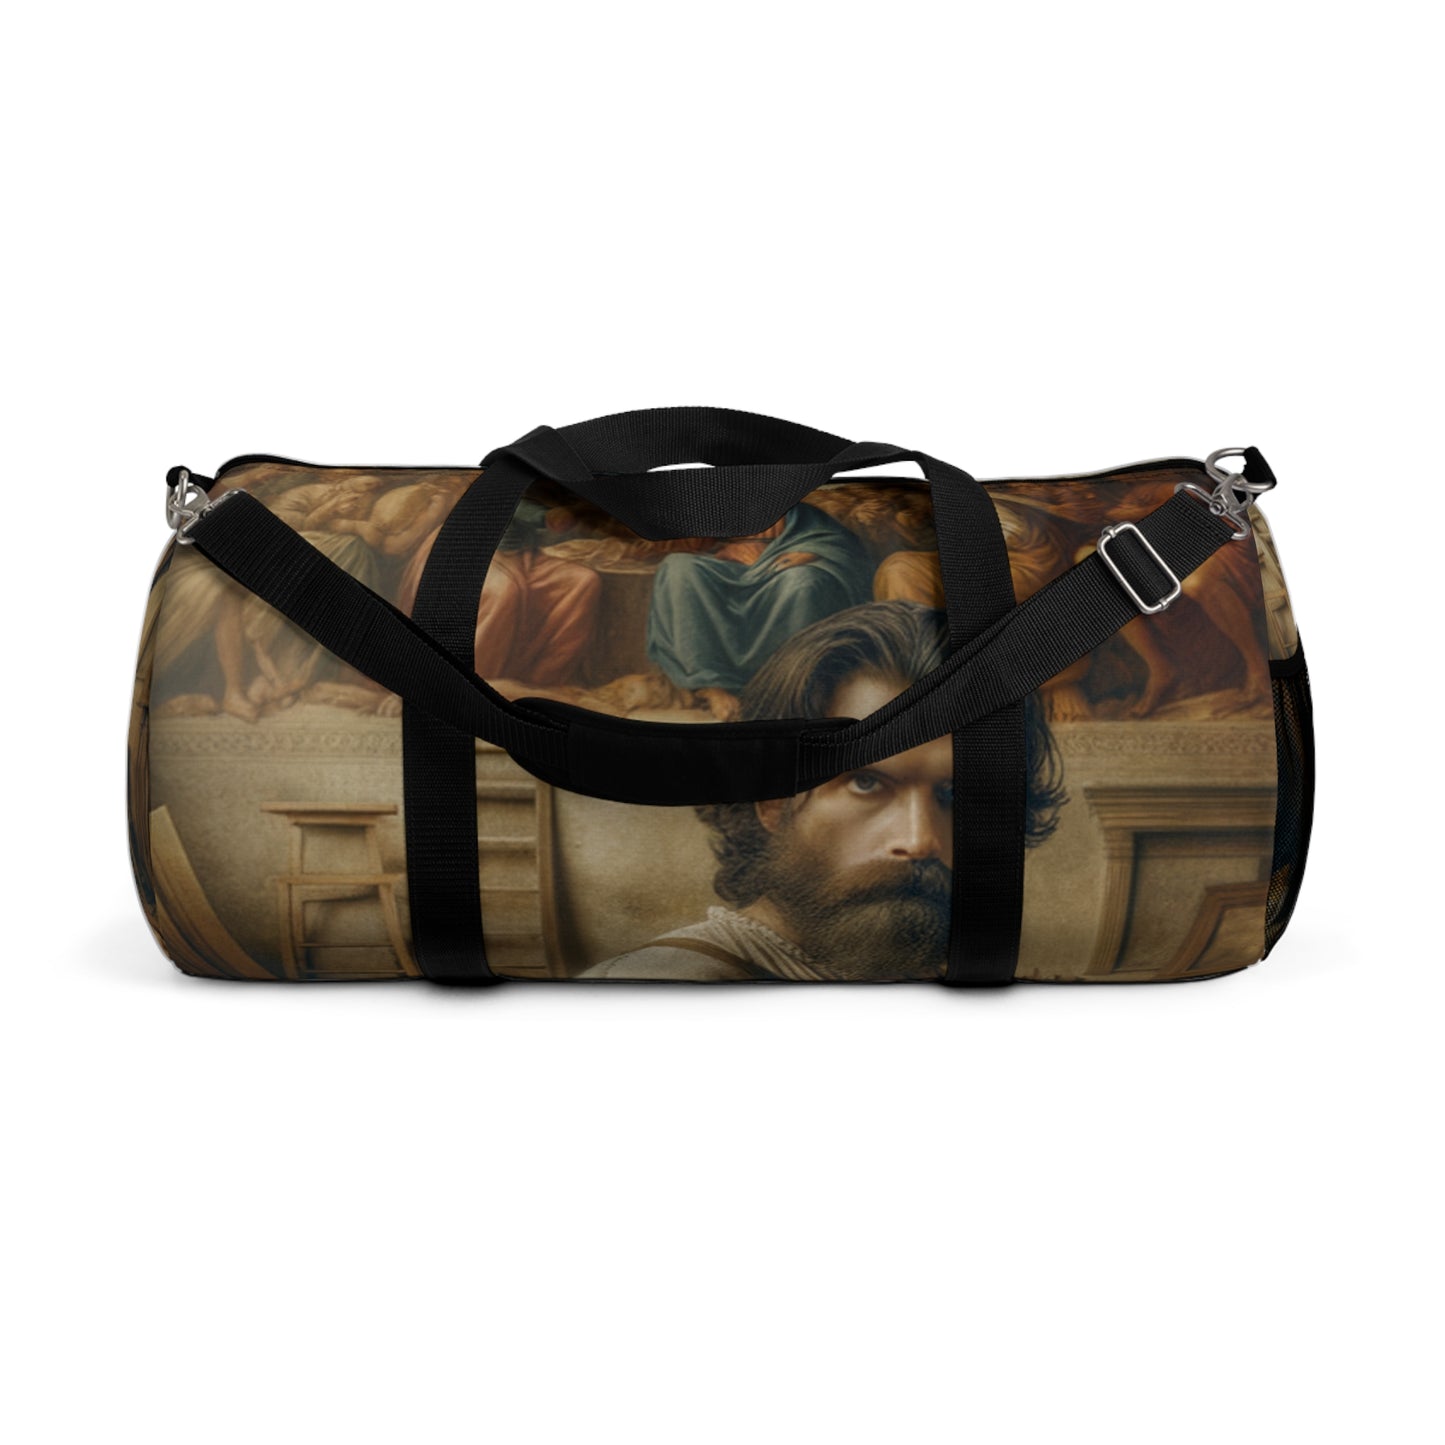 Ambrose Luxury Leather Goods - Duffel Bag